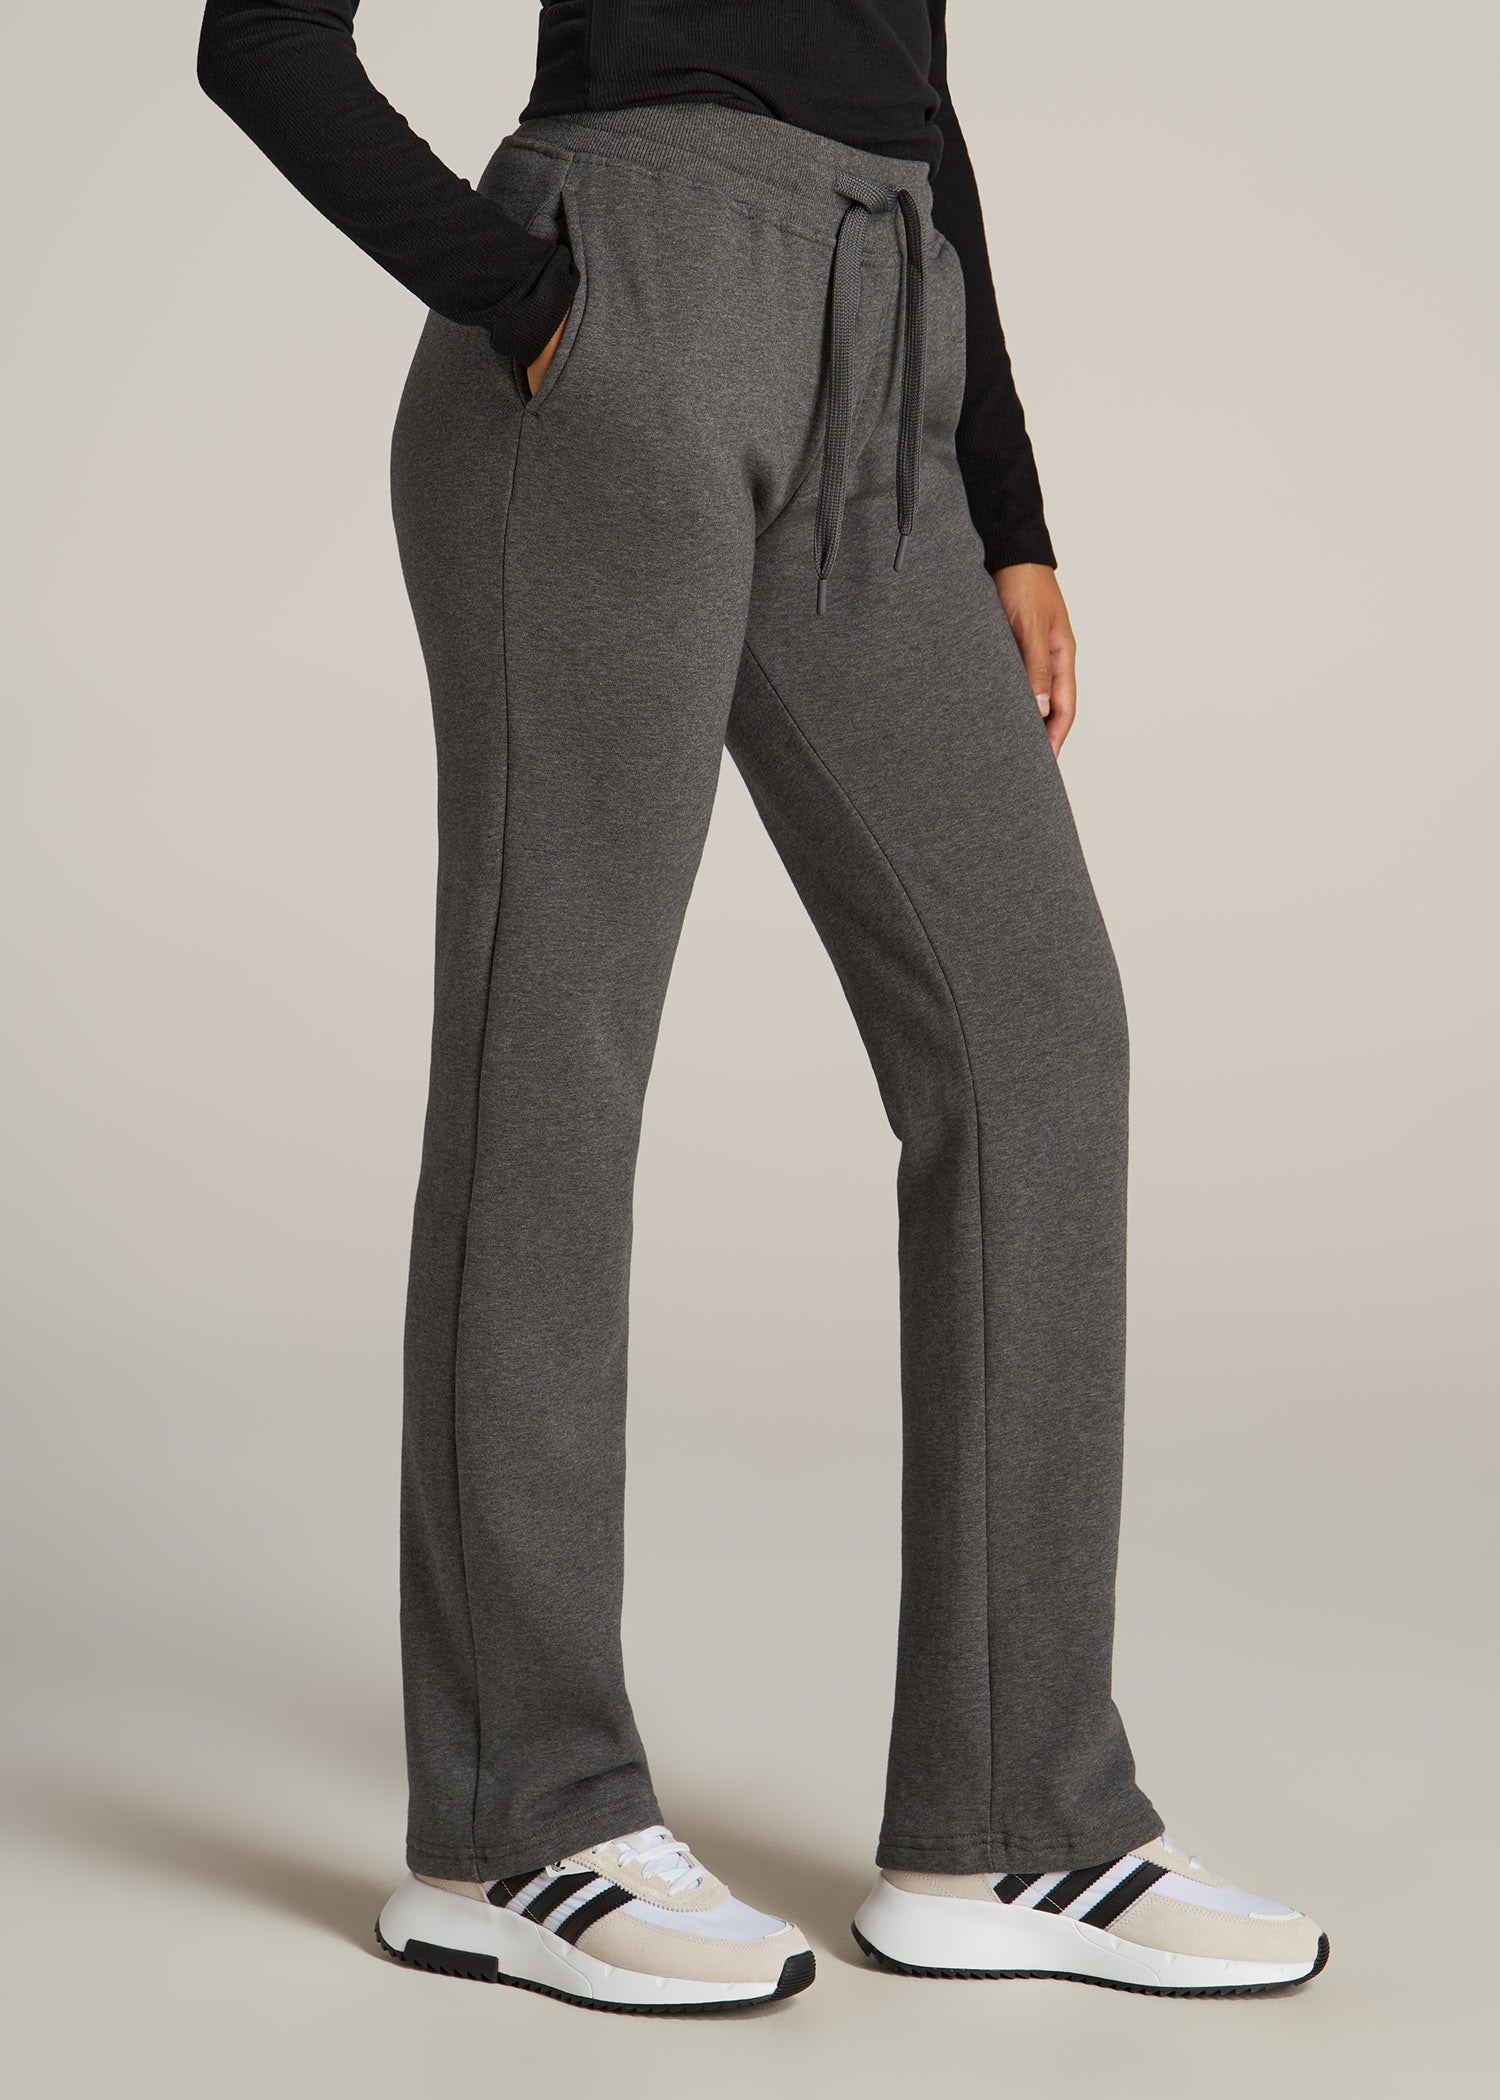 Women's Hollister Sweatpants, size 38 (Black)